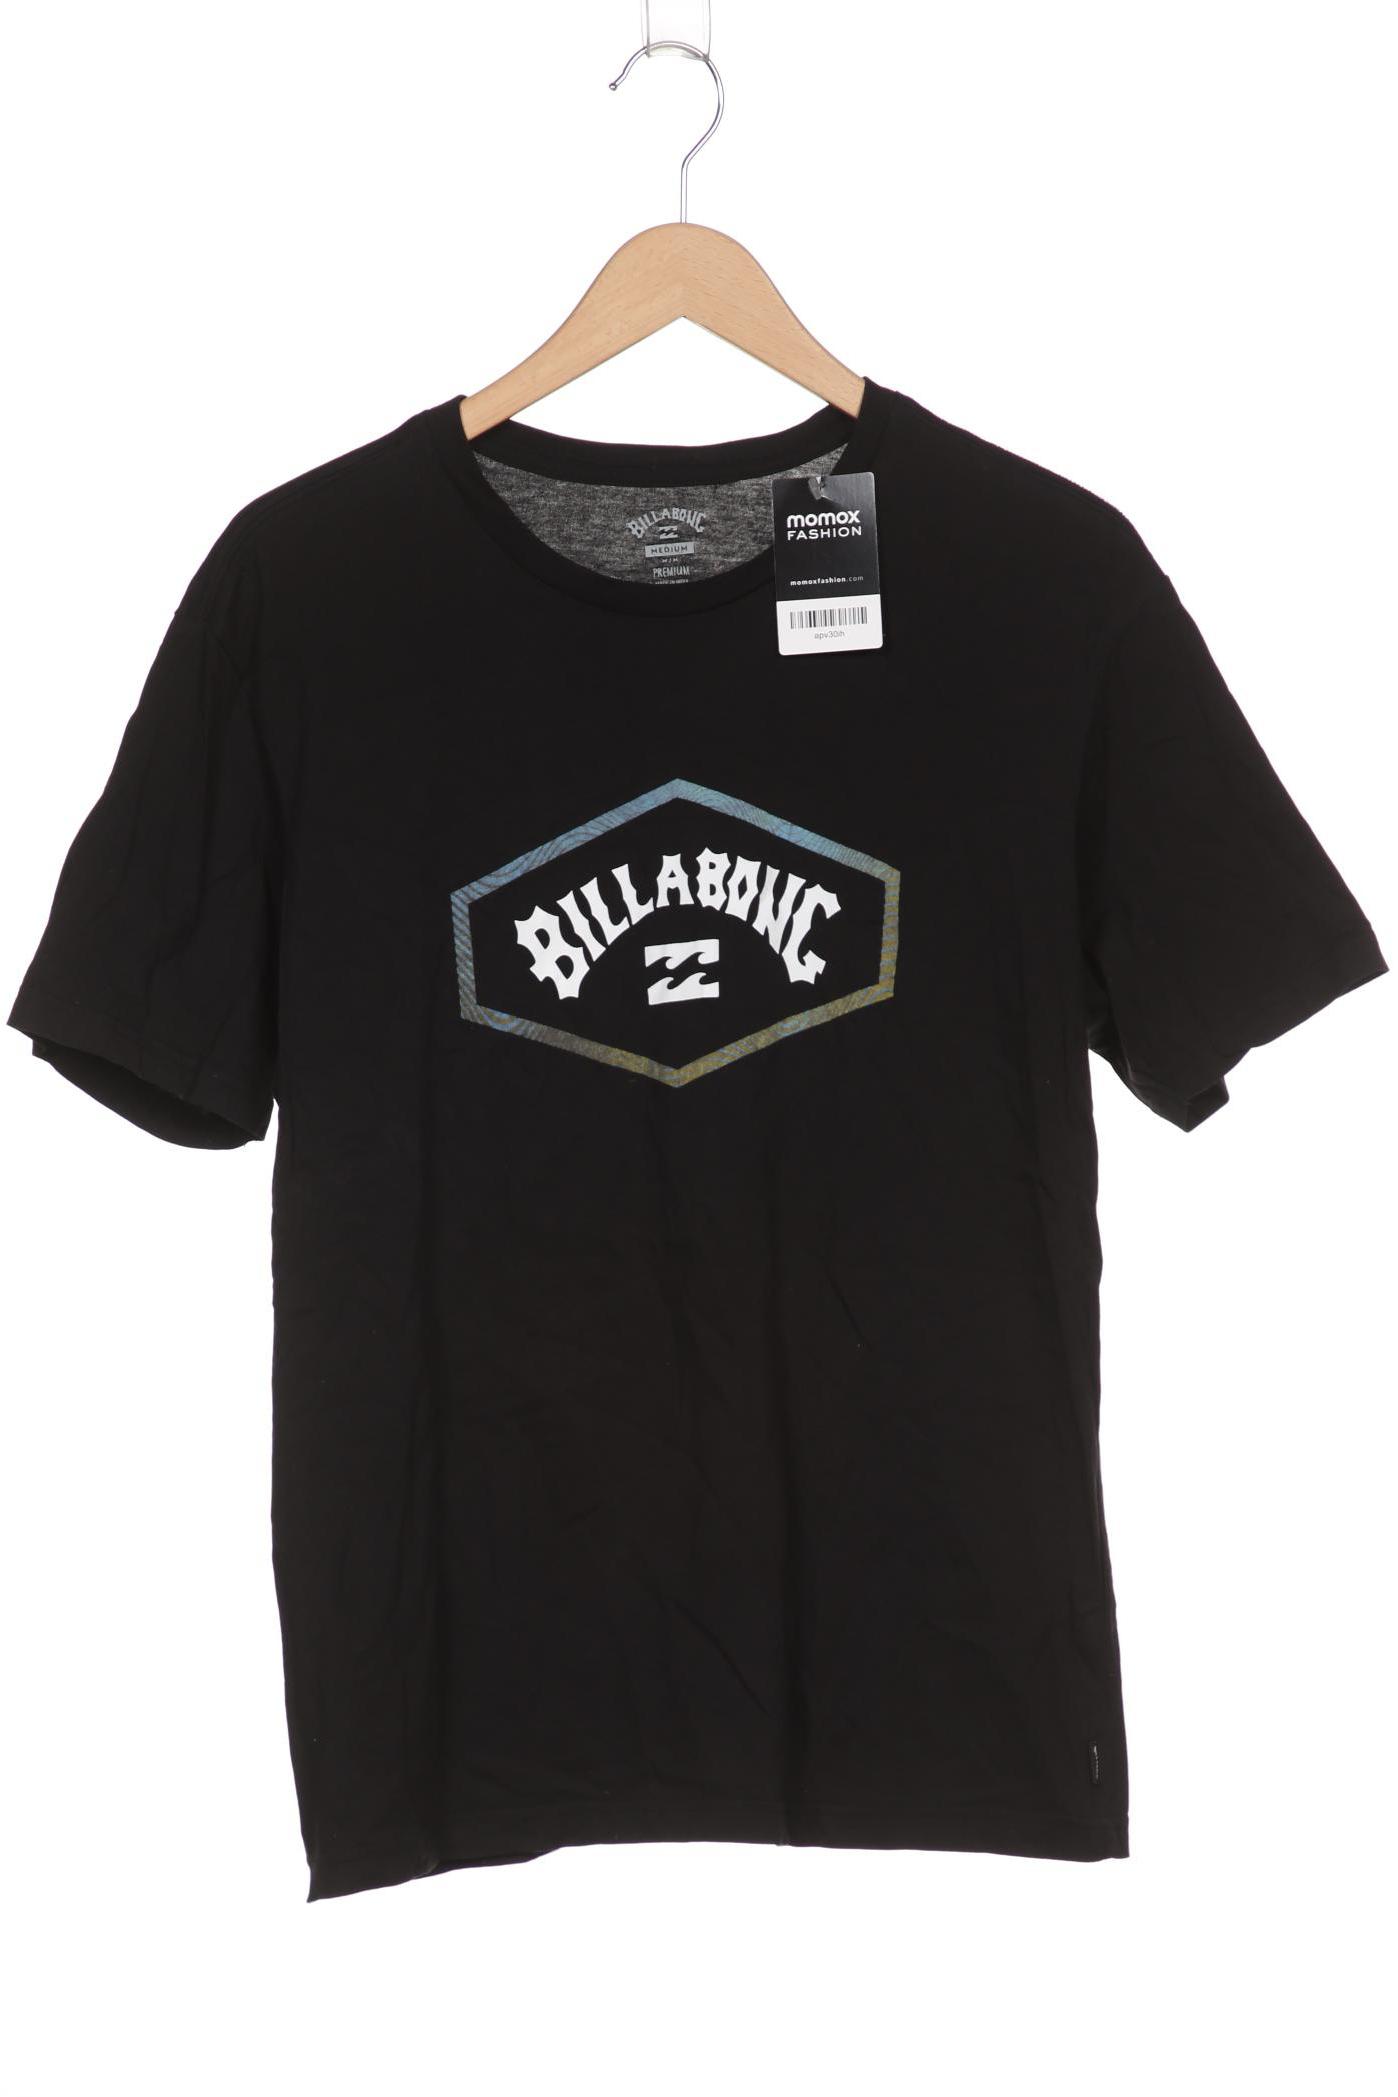 BILLABONG Herren T-Shirt, schwarz von Billabong